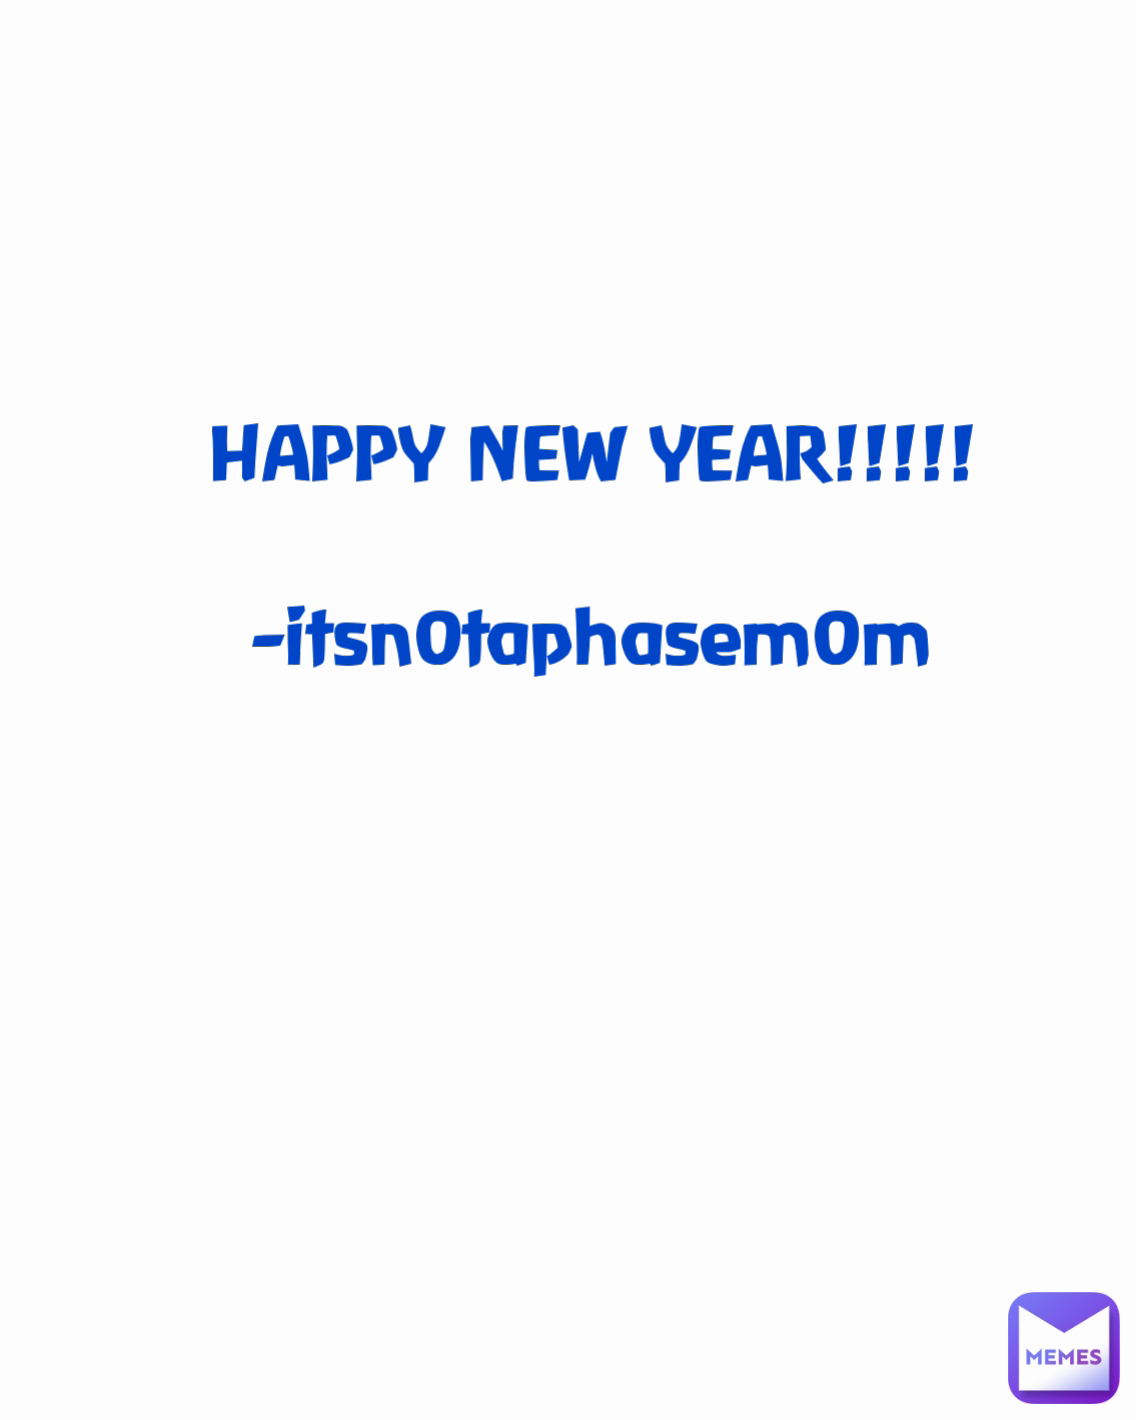 HAPPY NEW YEAR!!!!!

-itsn0taphasem0m